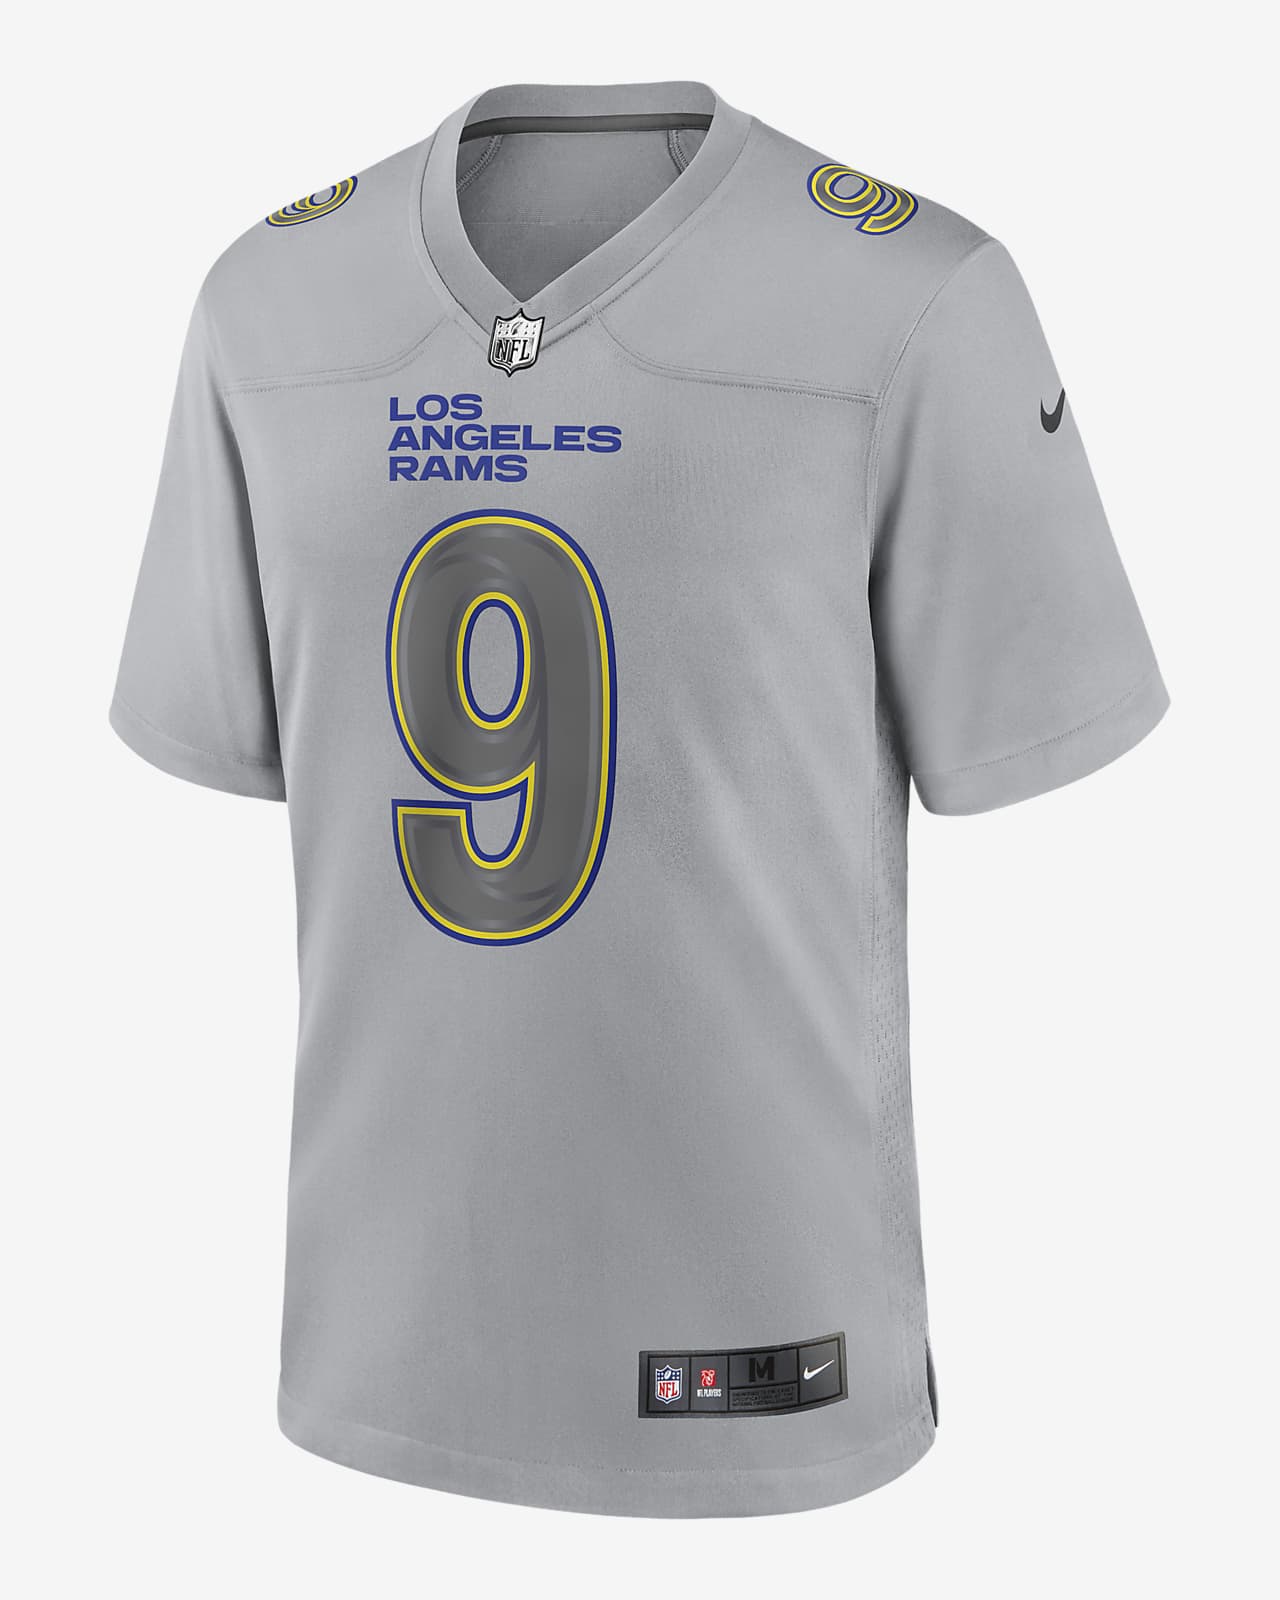 NFL Los Angeles Rams Atmosphere (Matthew Stafford) Men's Fashion Football Jersey